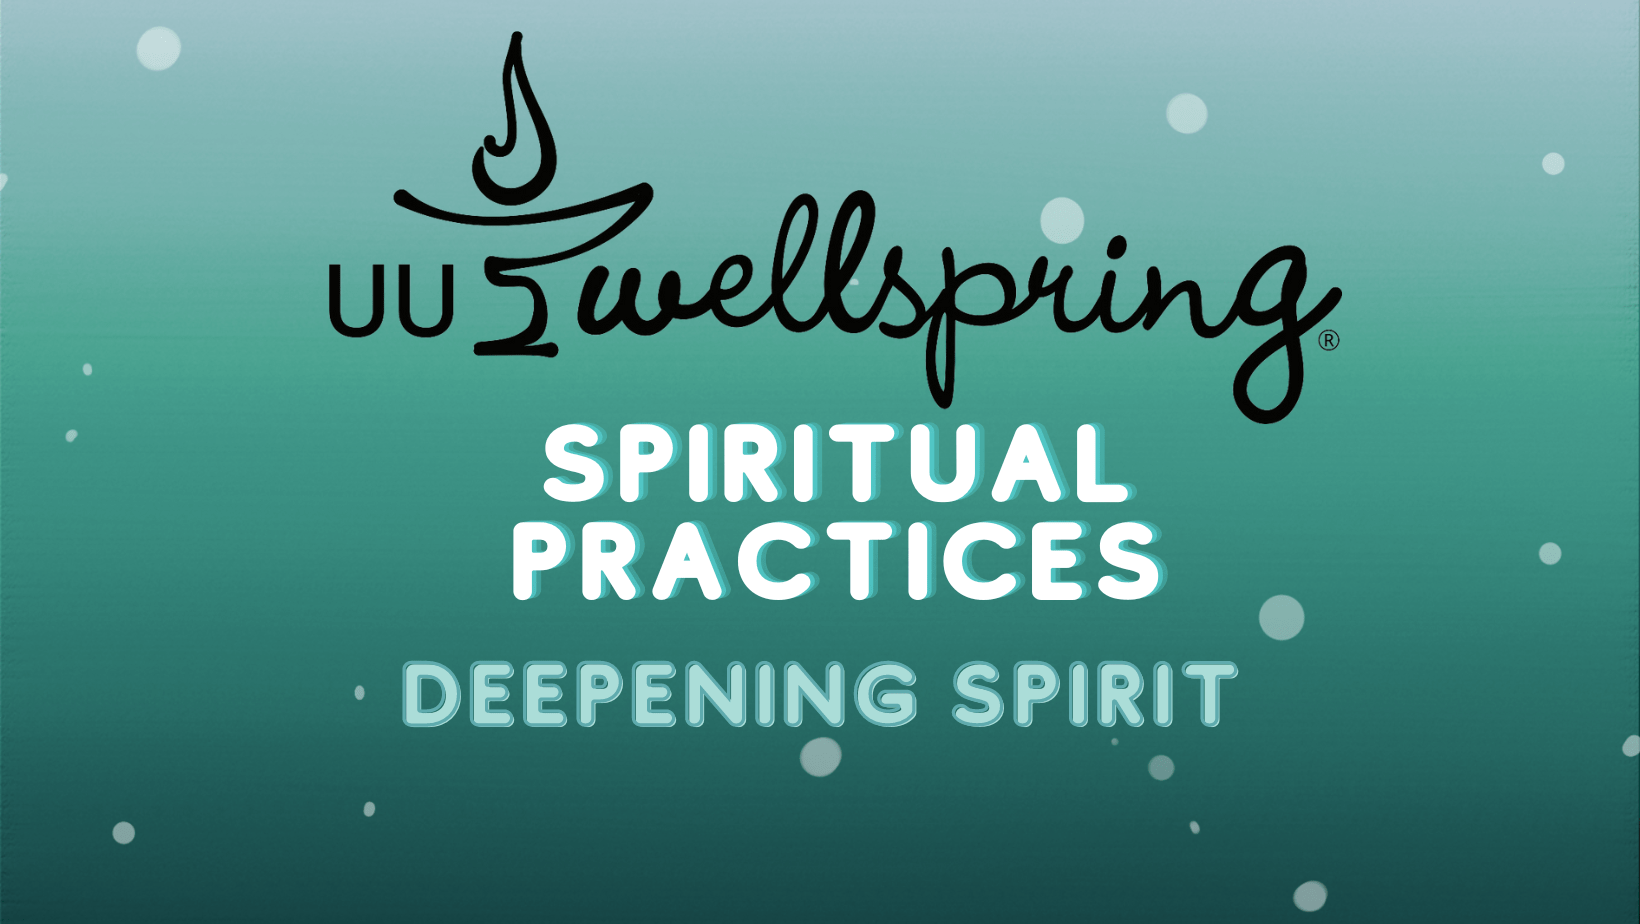 UU Wellspring Spiritual Practices